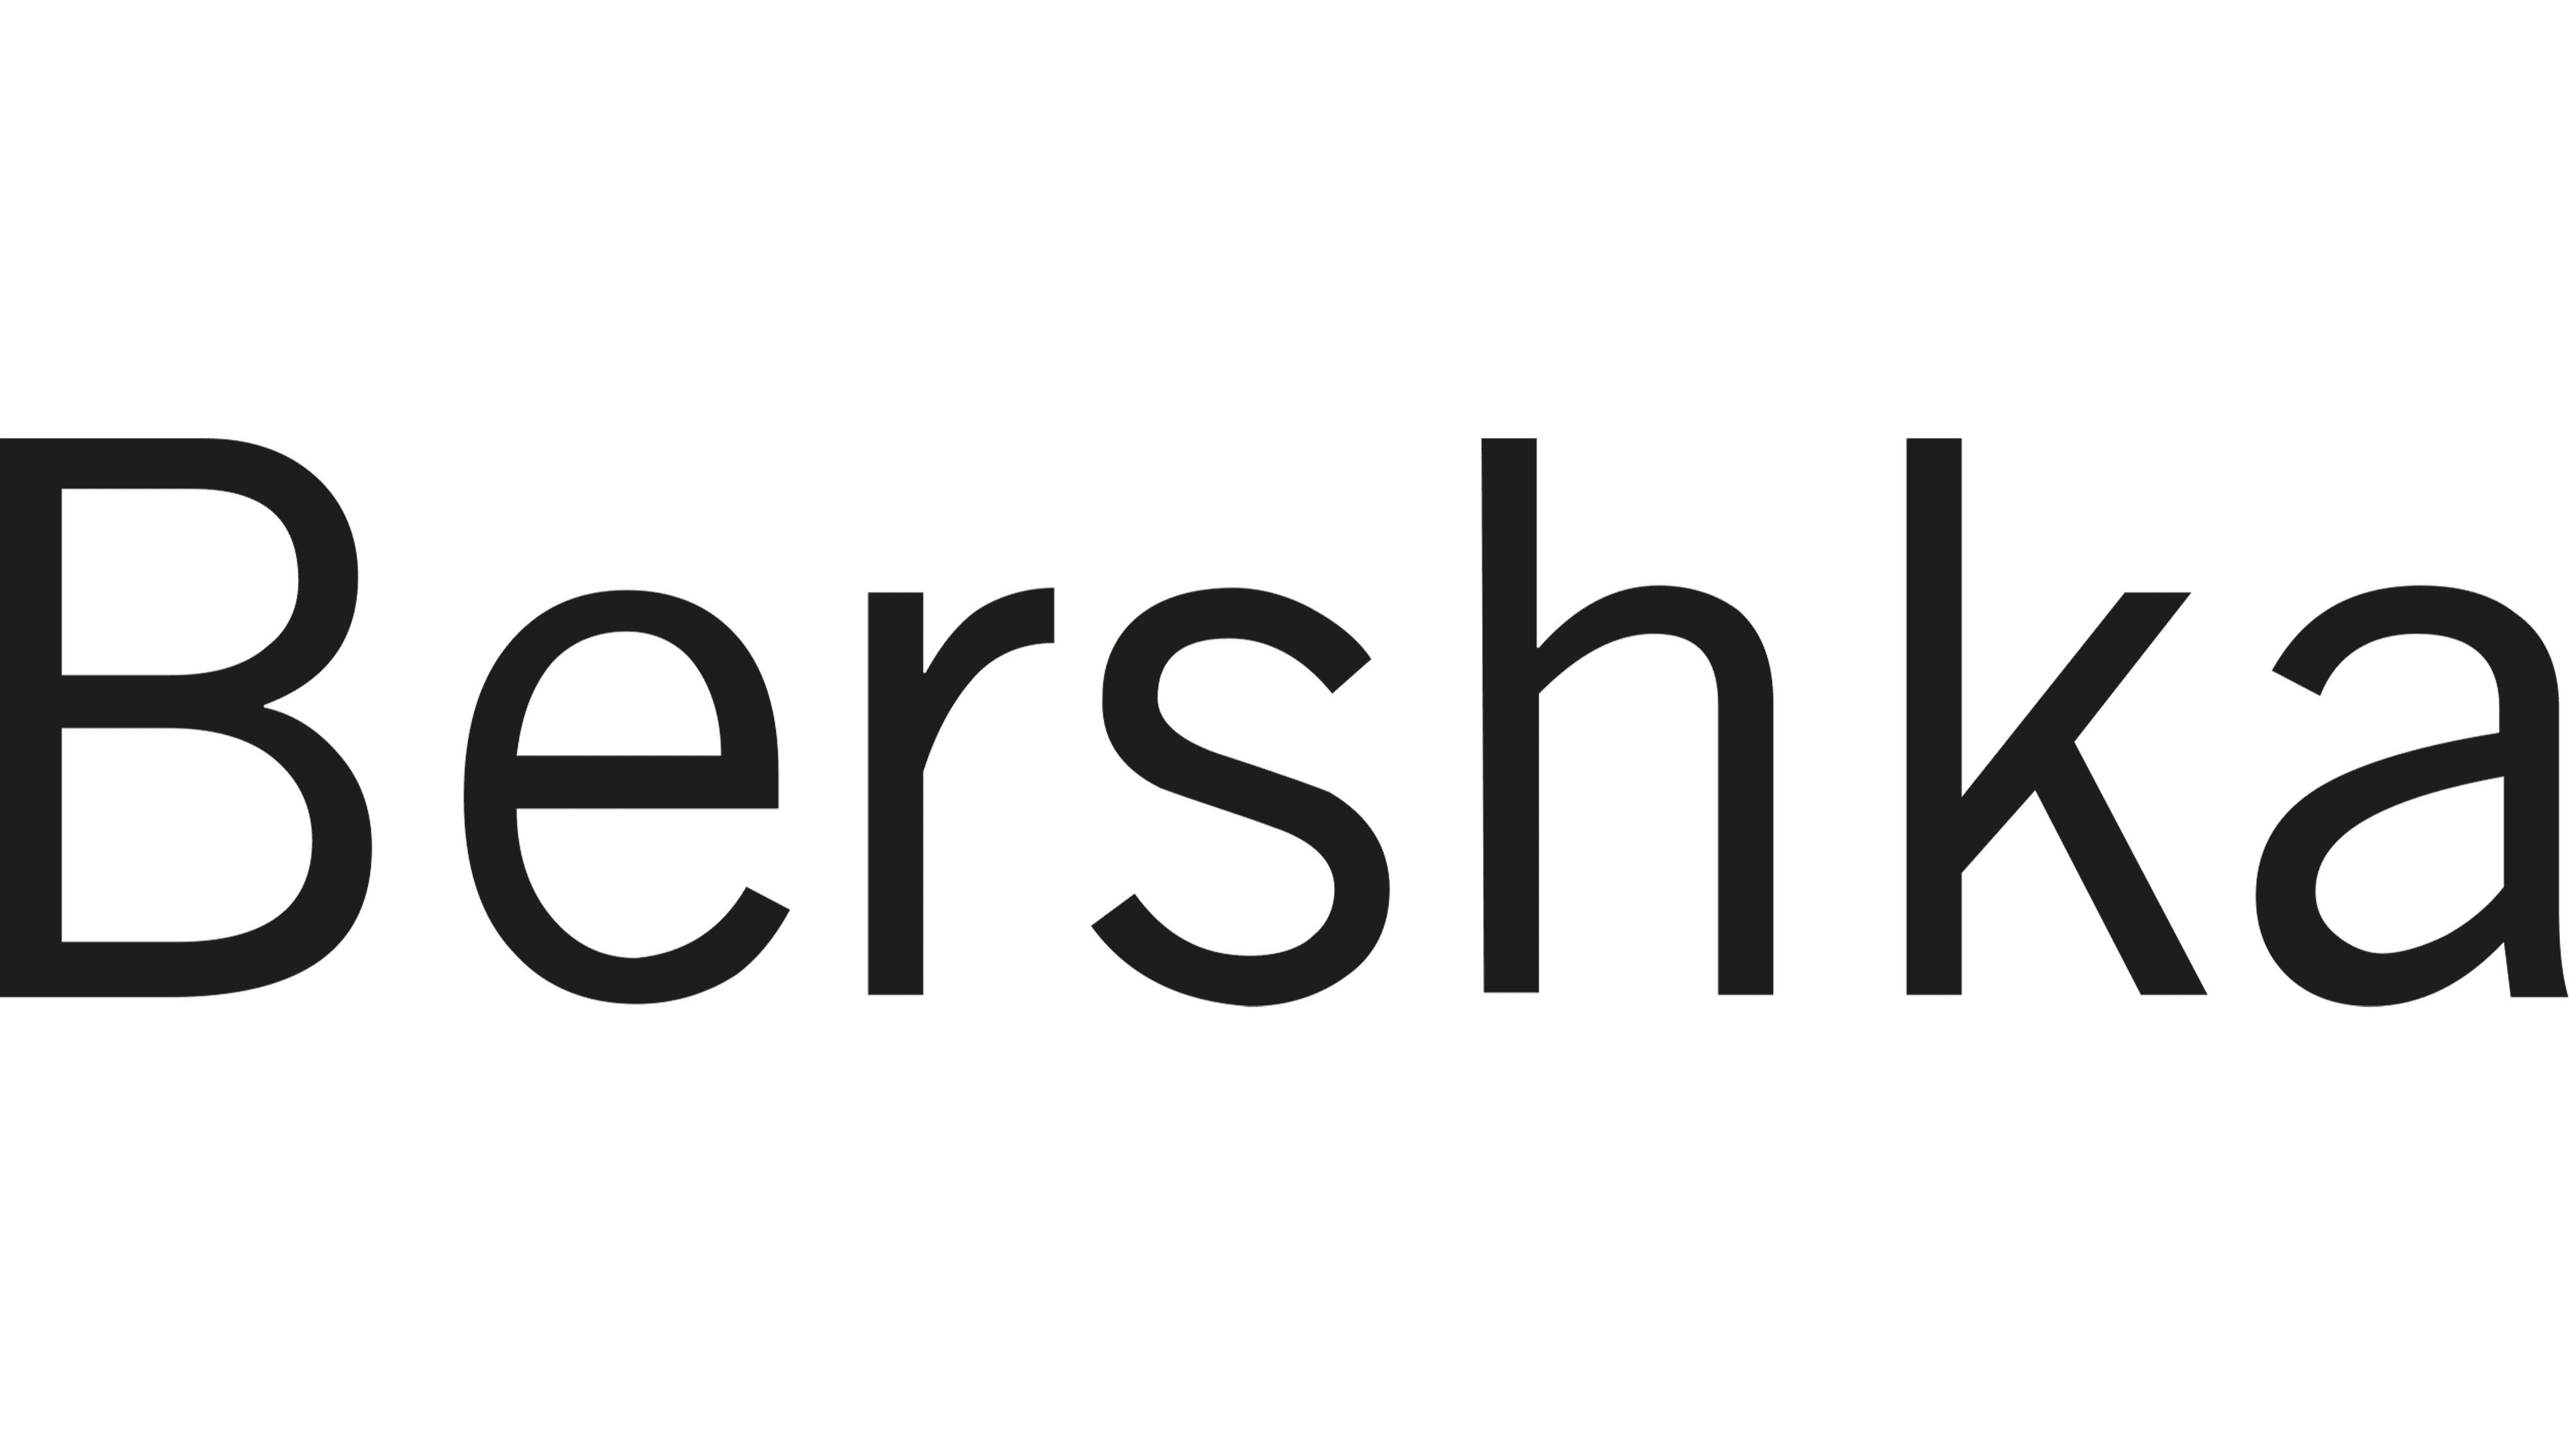 Products Bershka HD Wallpaper | Background Image